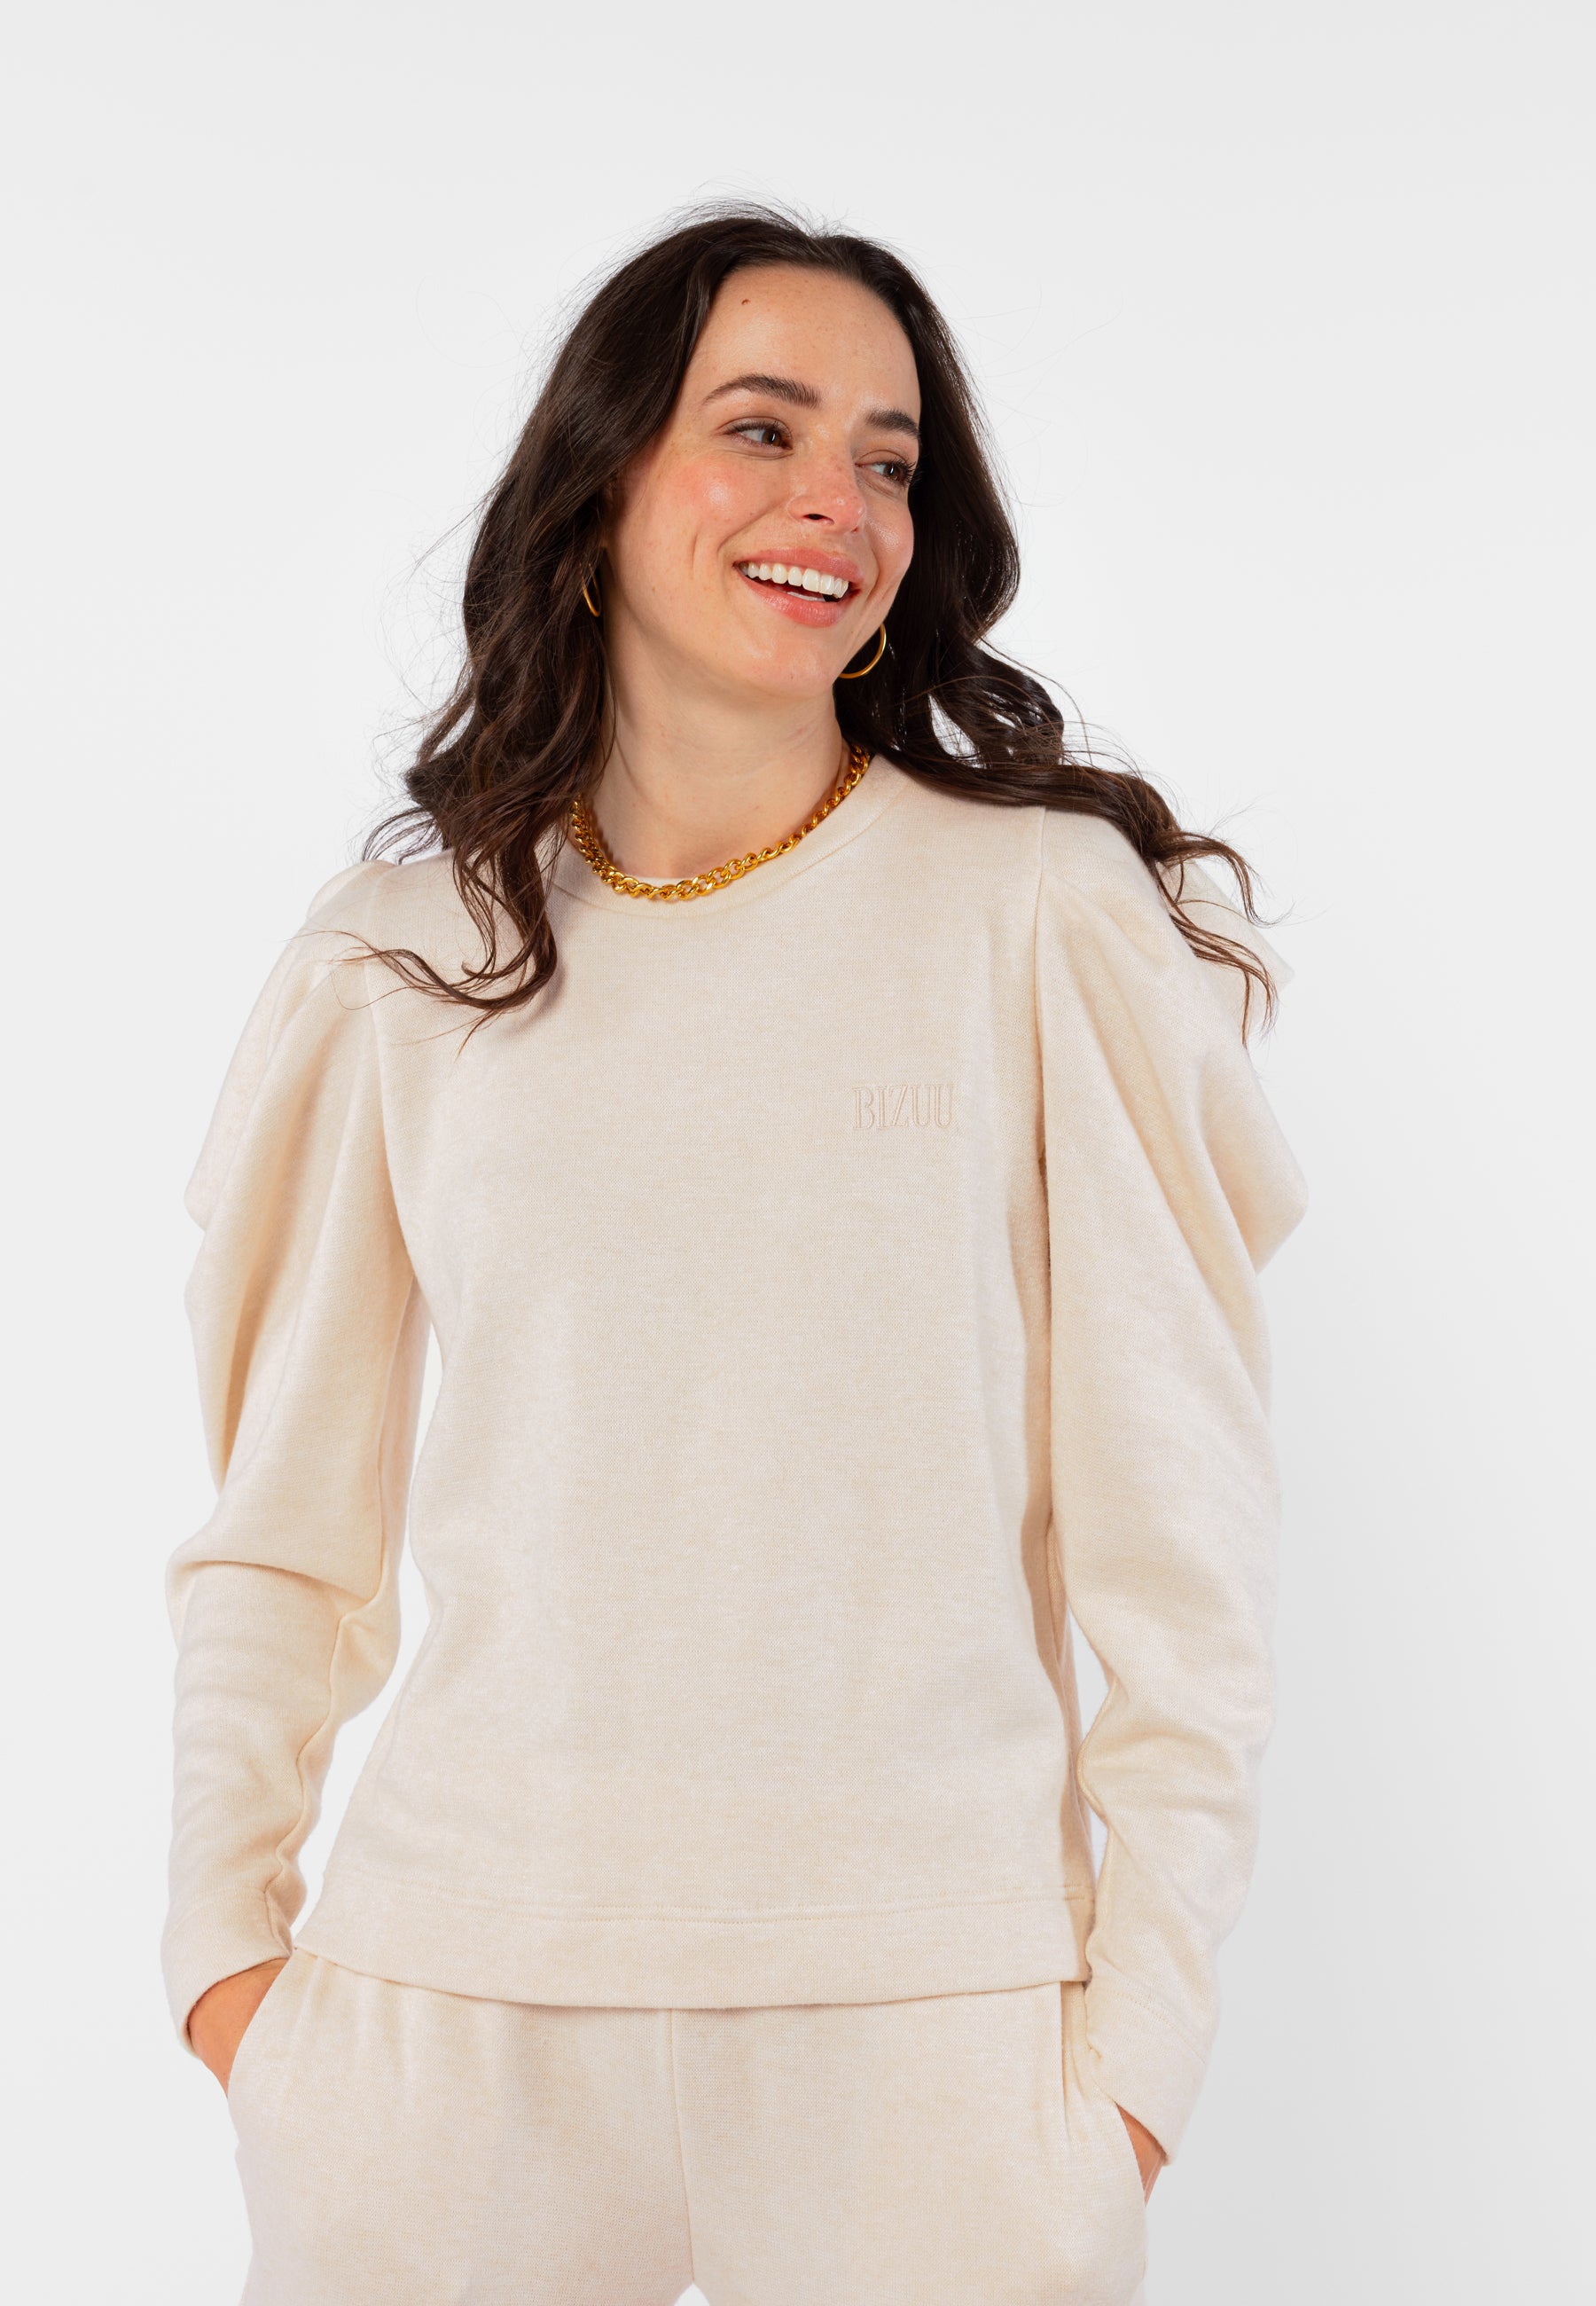 KSAR beige oversized sweatshirt with an embroidered logo